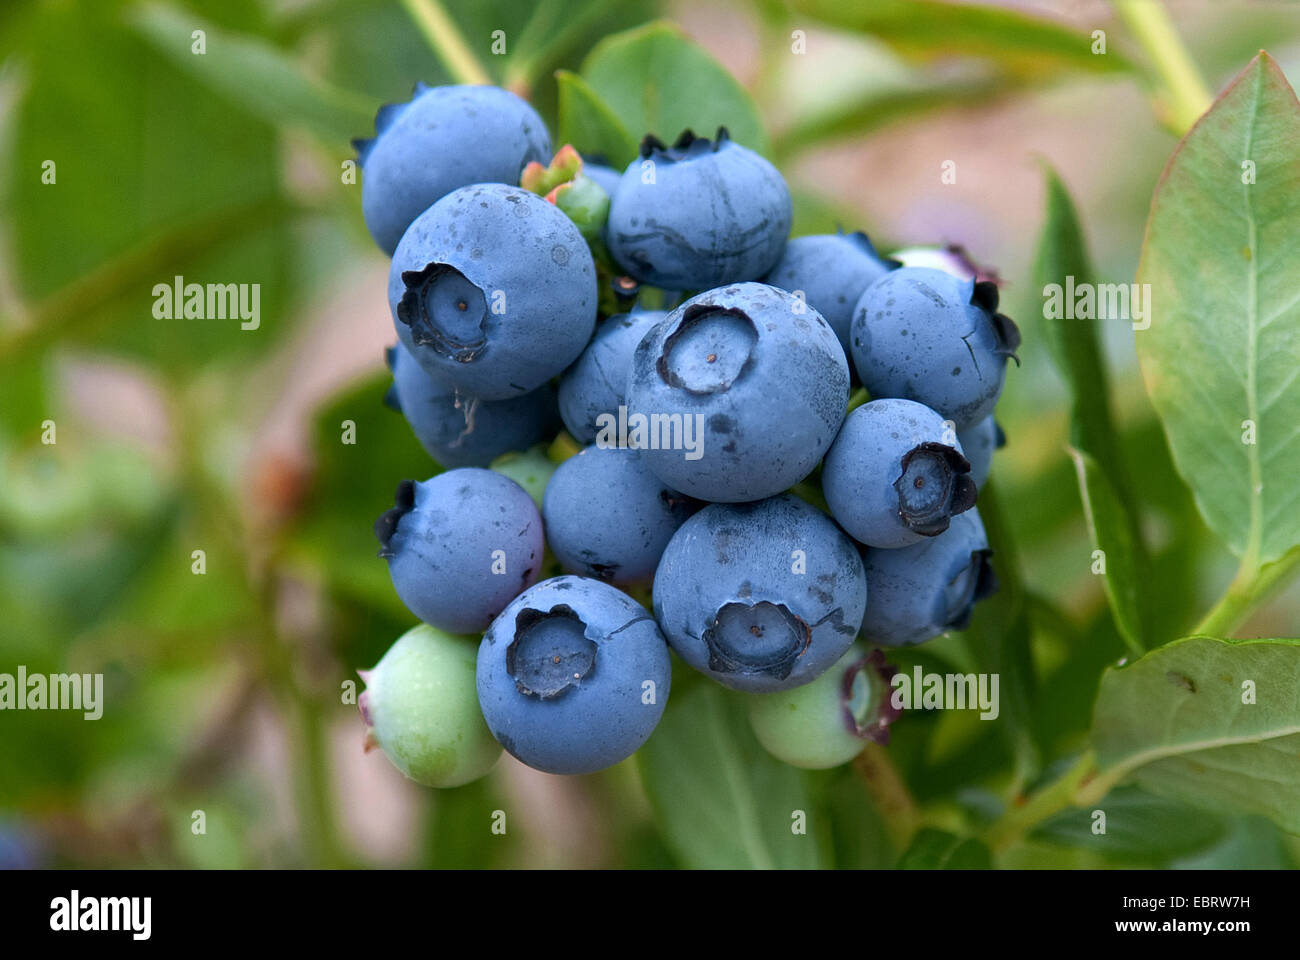 Alta highbush blueberry, Pantano de arándano, Arándano (Vaccinium corymbosum 'Duke', Vaccinium corymbosum Duke), cultivar el duque Foto de stock